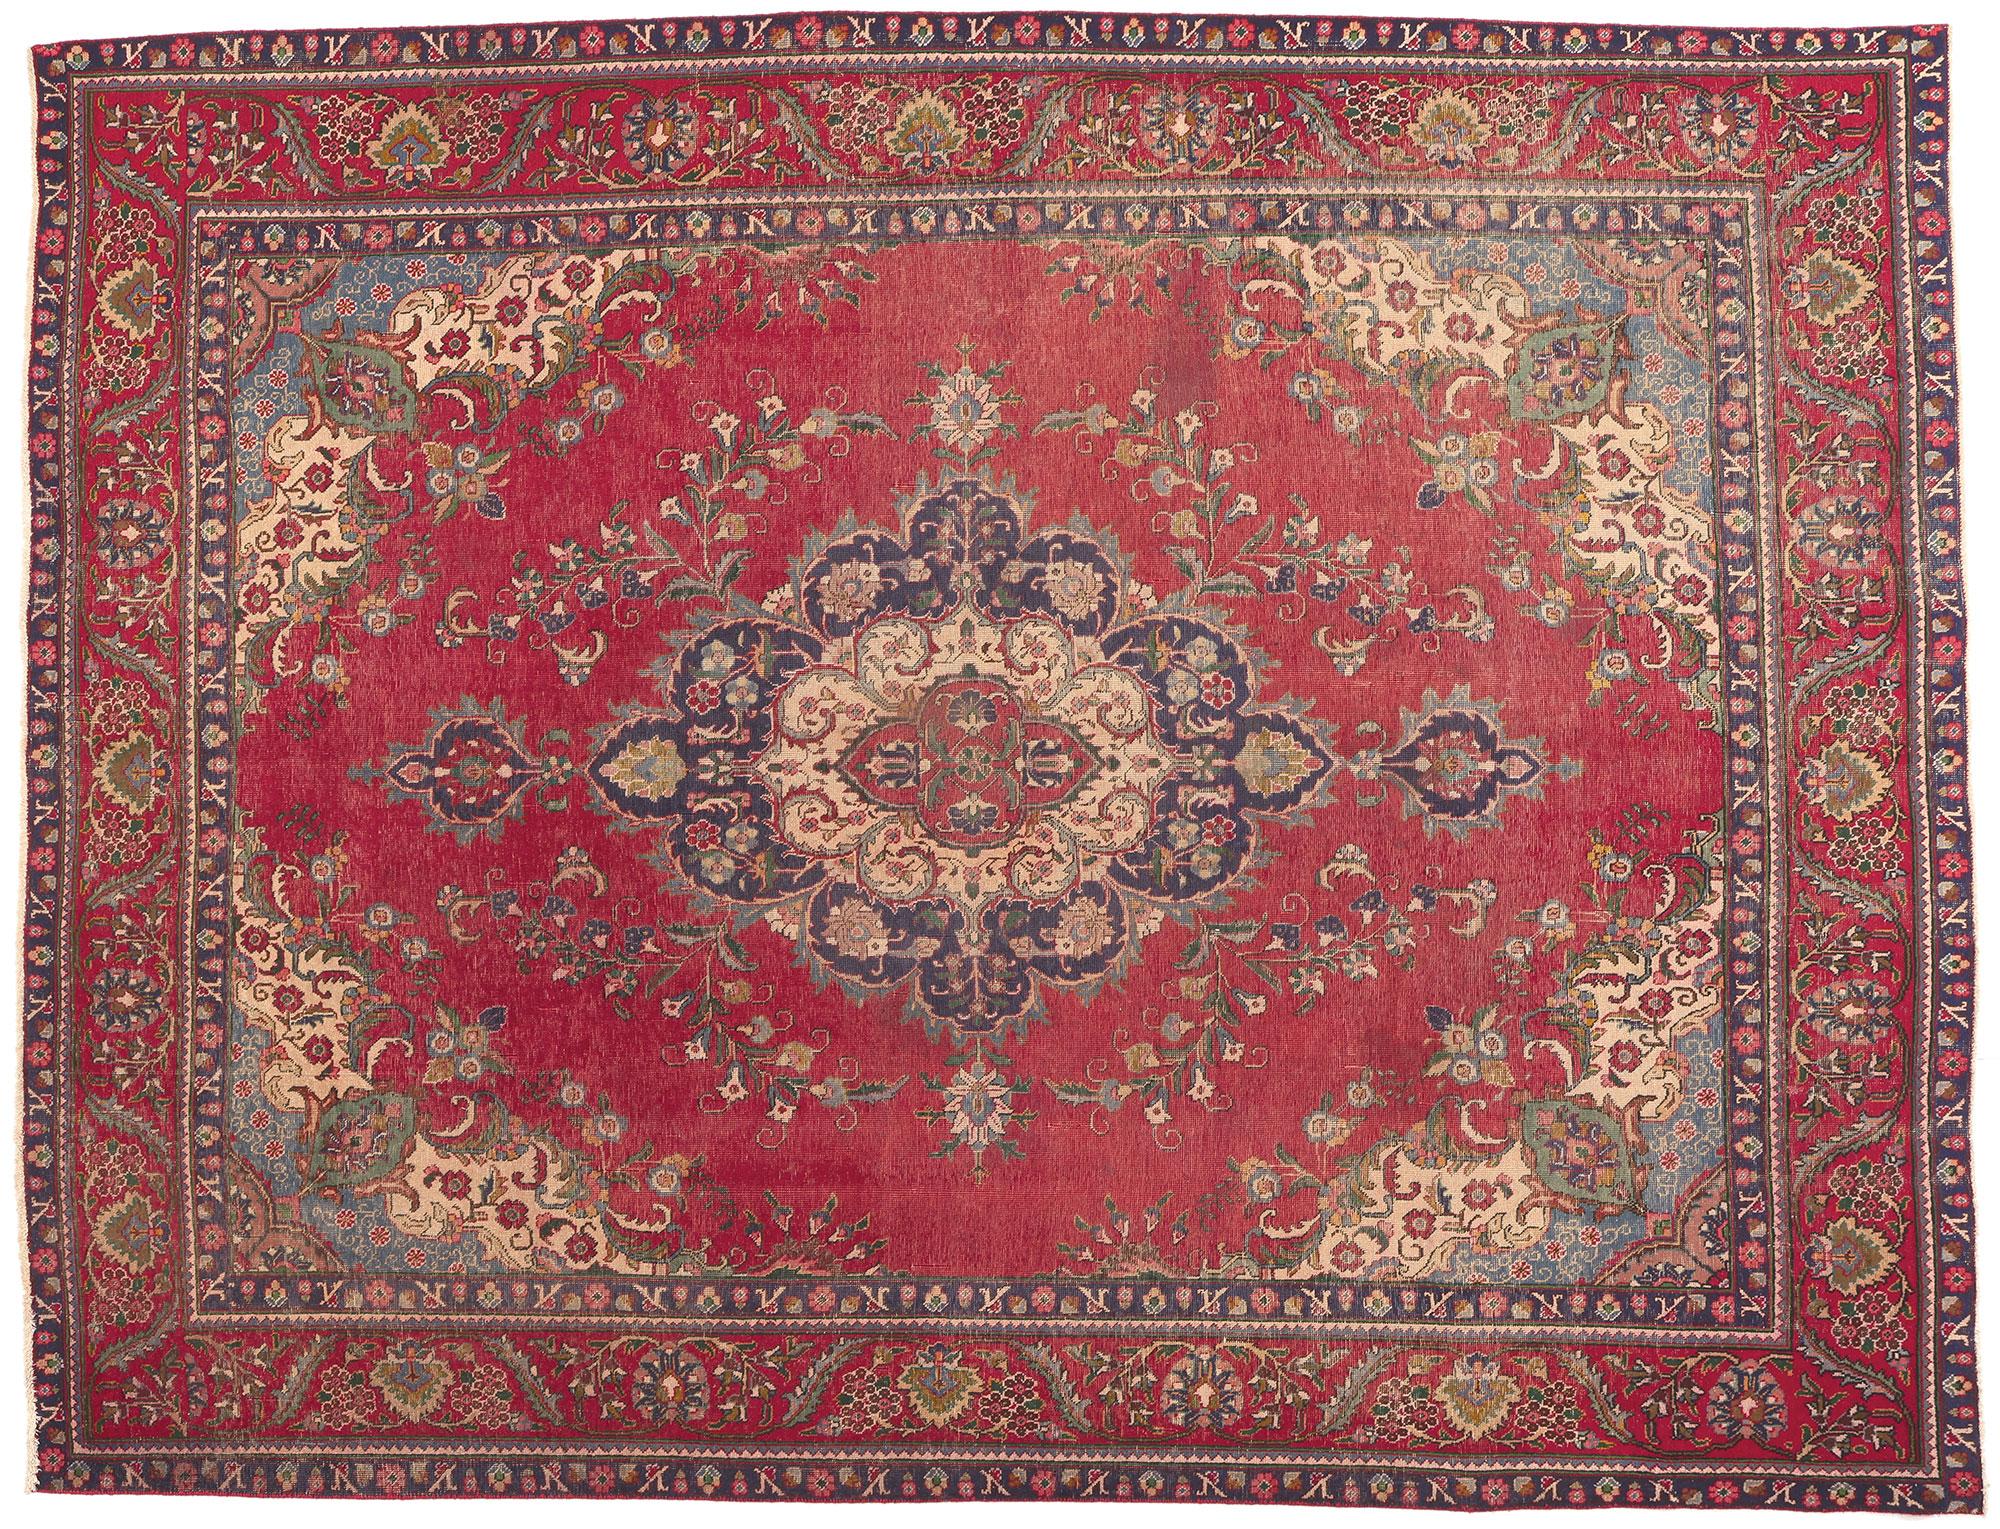 Antique-Worn Persian Tabriz Rug, Rustic Sensibility Meets Nostalgic Charm For Sale 4